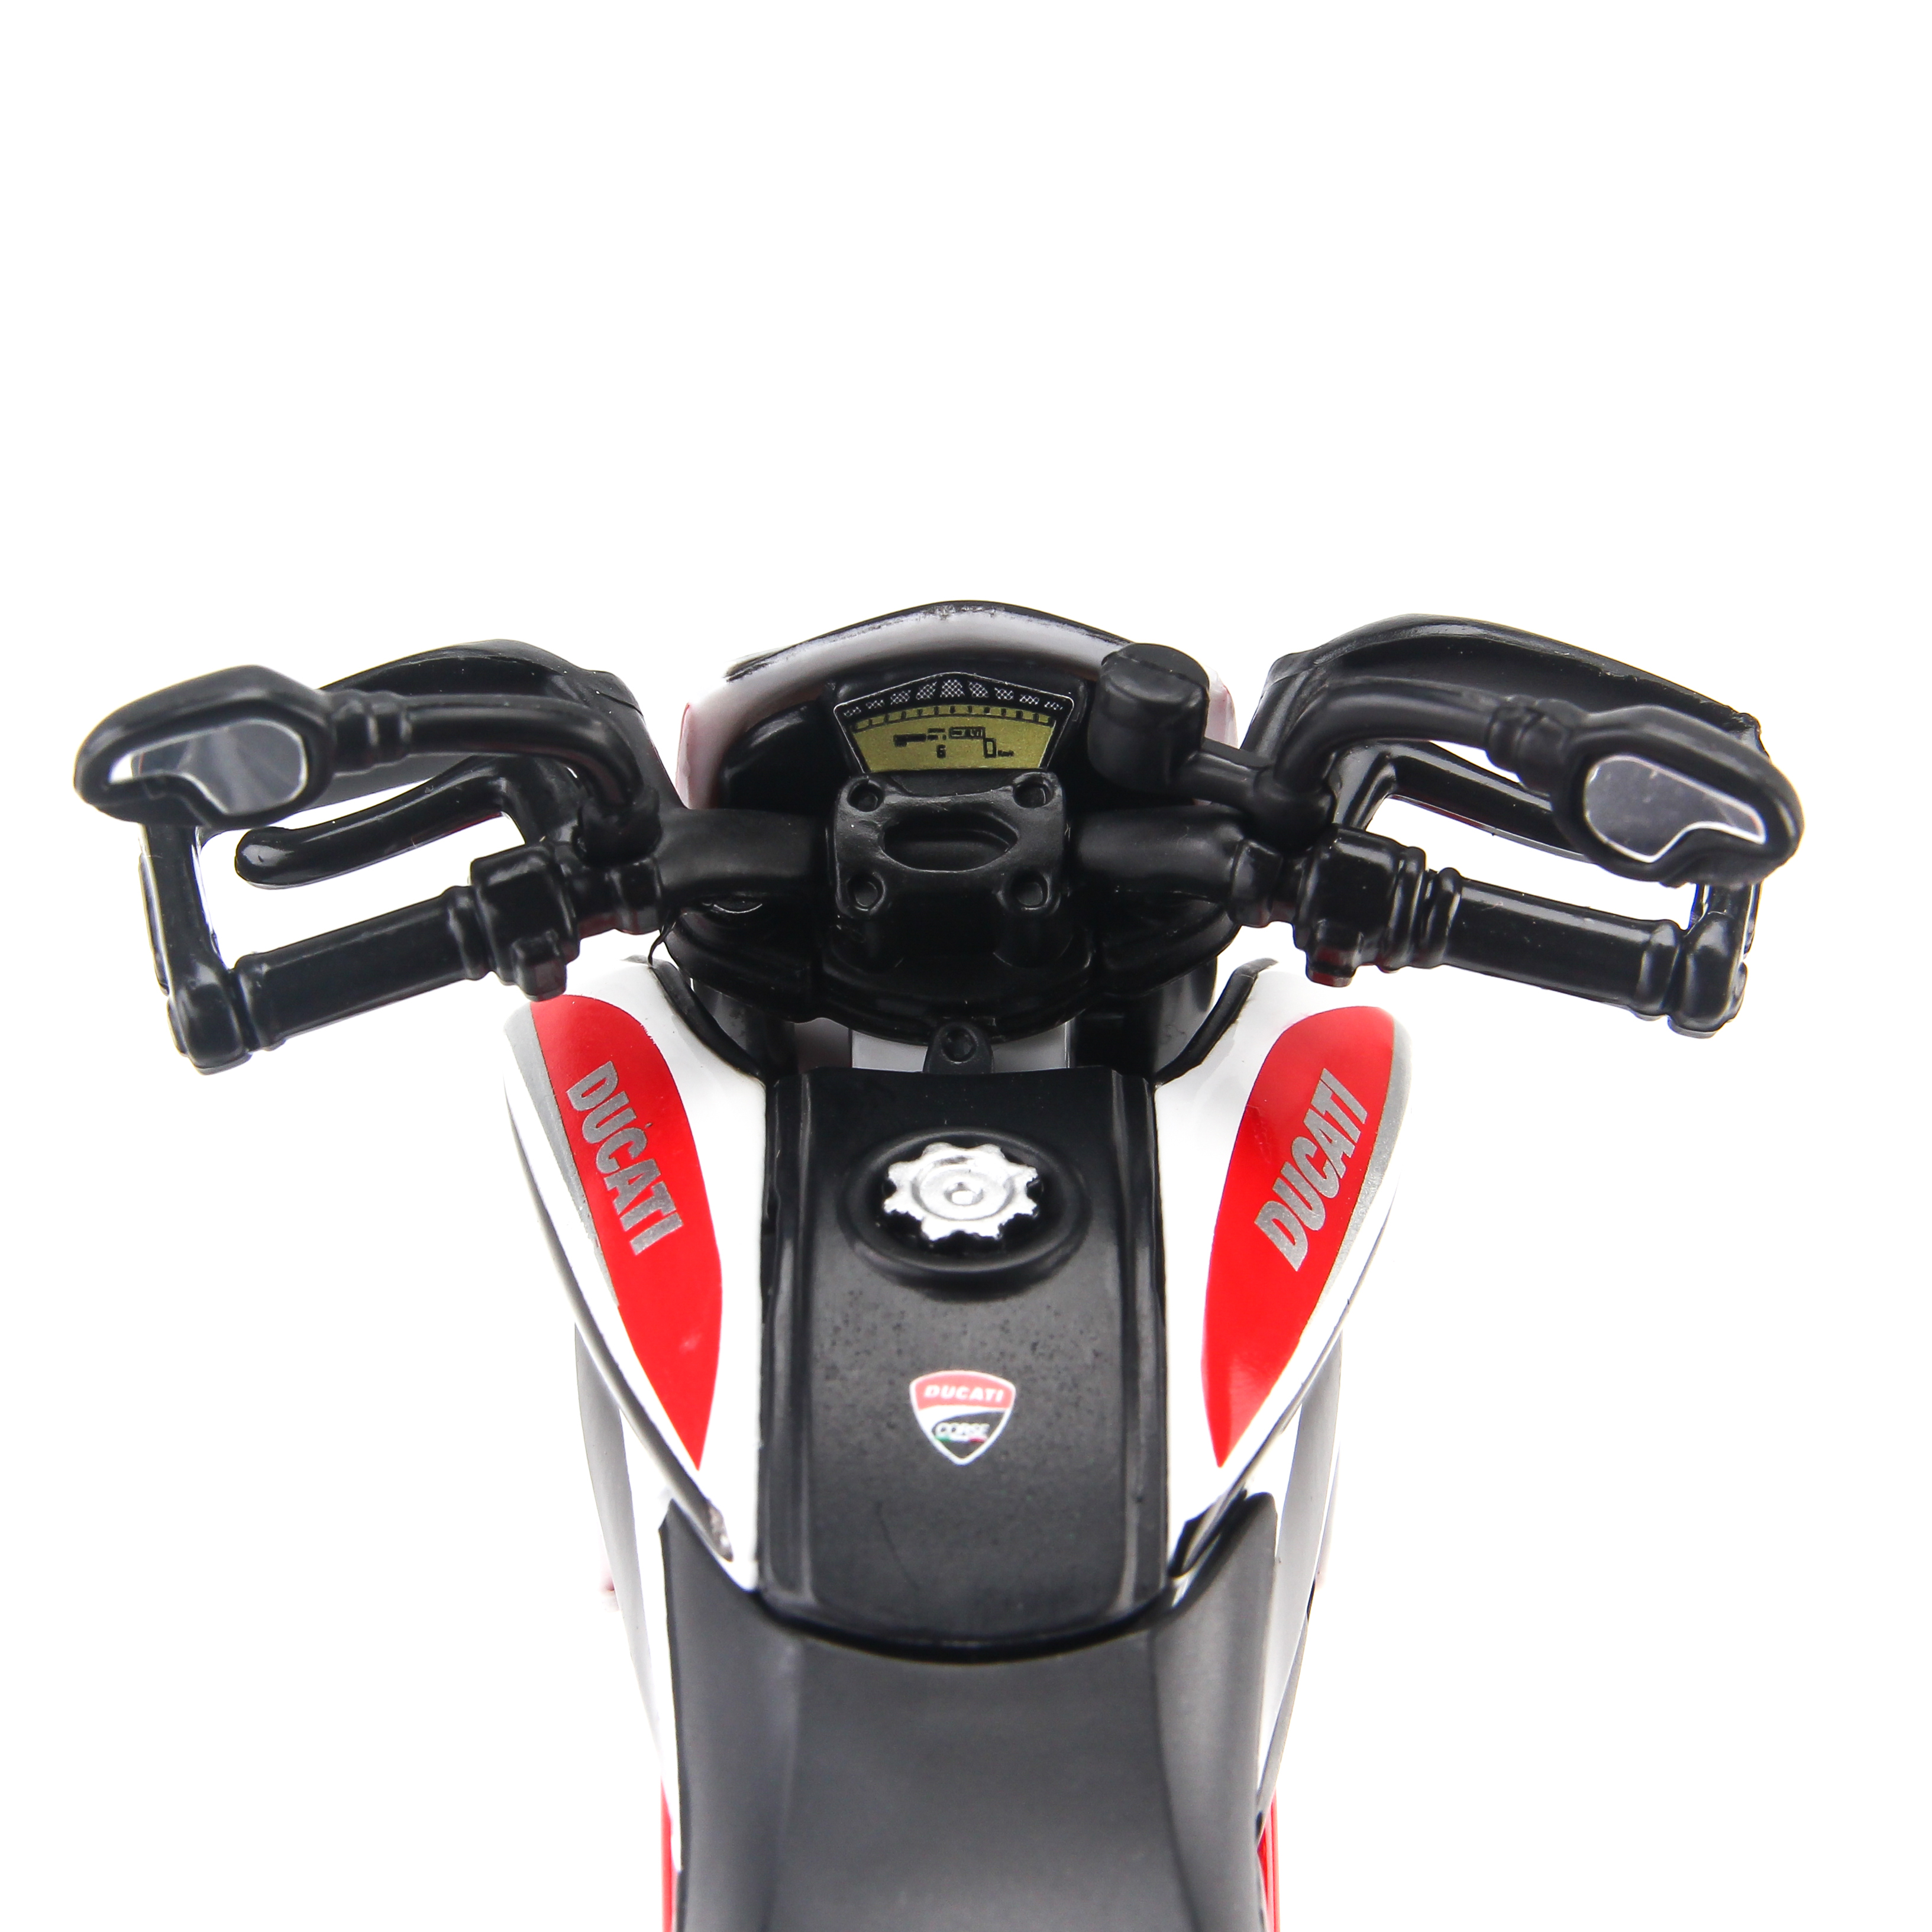 Mô Hình Xe Ducati Hypermotard SP 2013 White 1:12 Maisto MH-31101(20-13015)